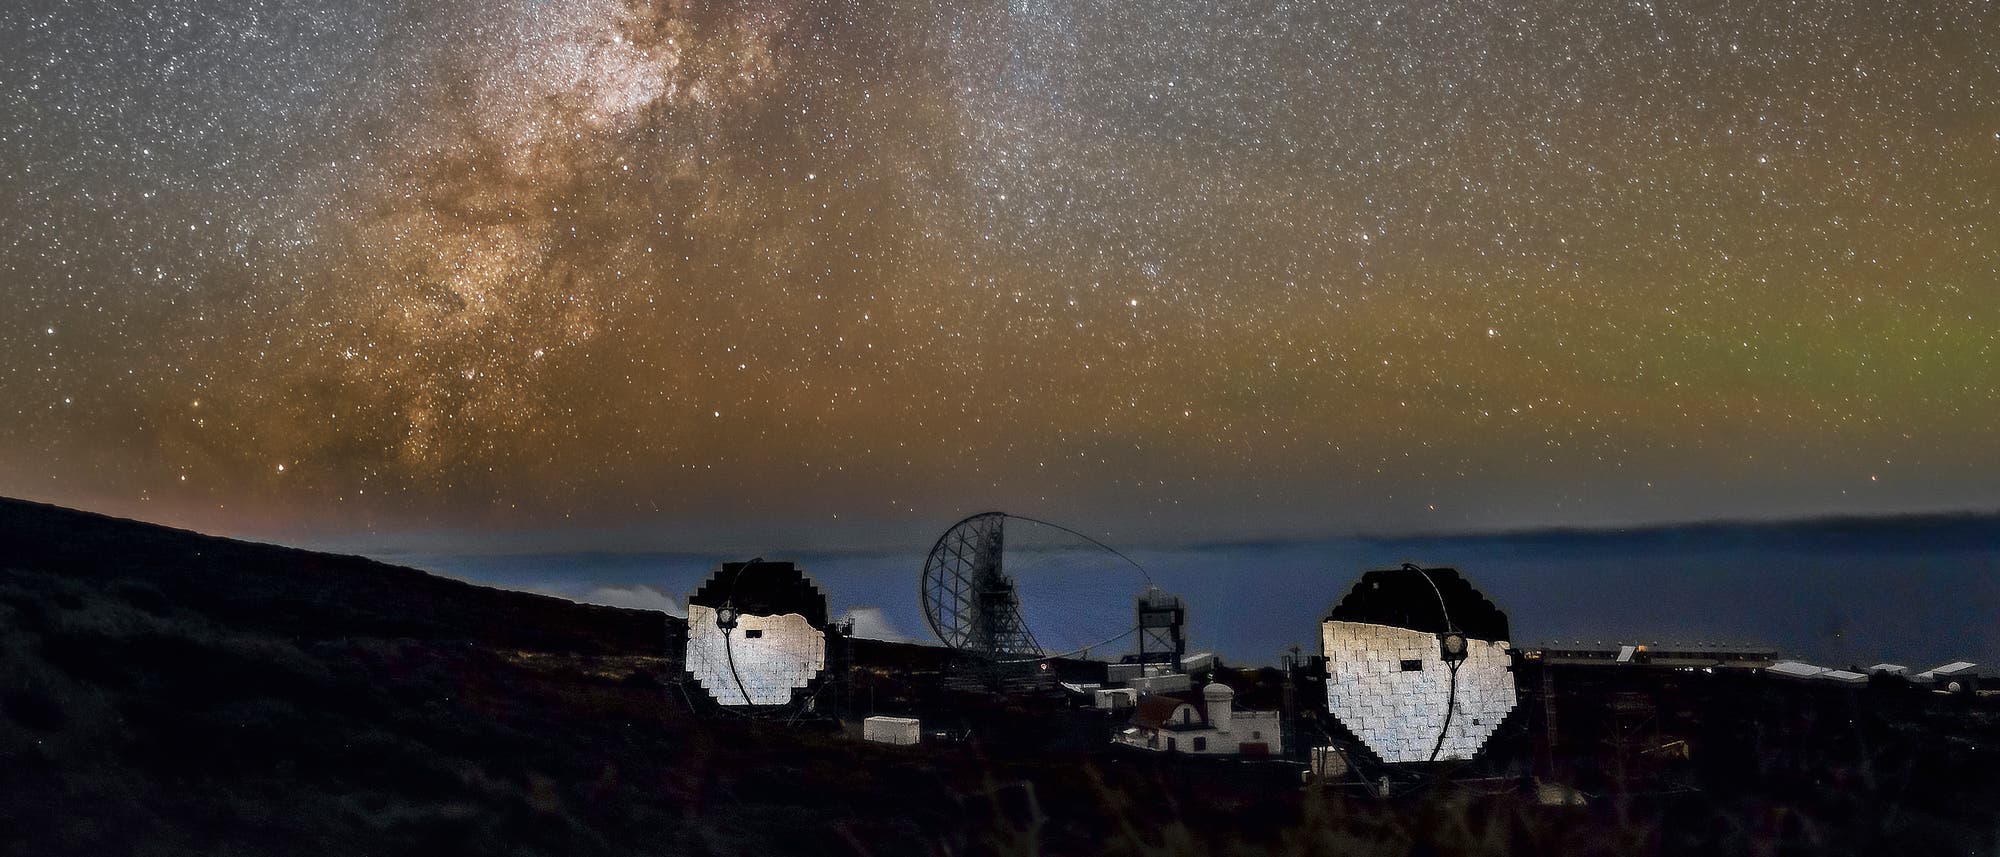 arge Size Telescope (LST-1) des Cherenkov Telescope Array (CTA) auf La Palma